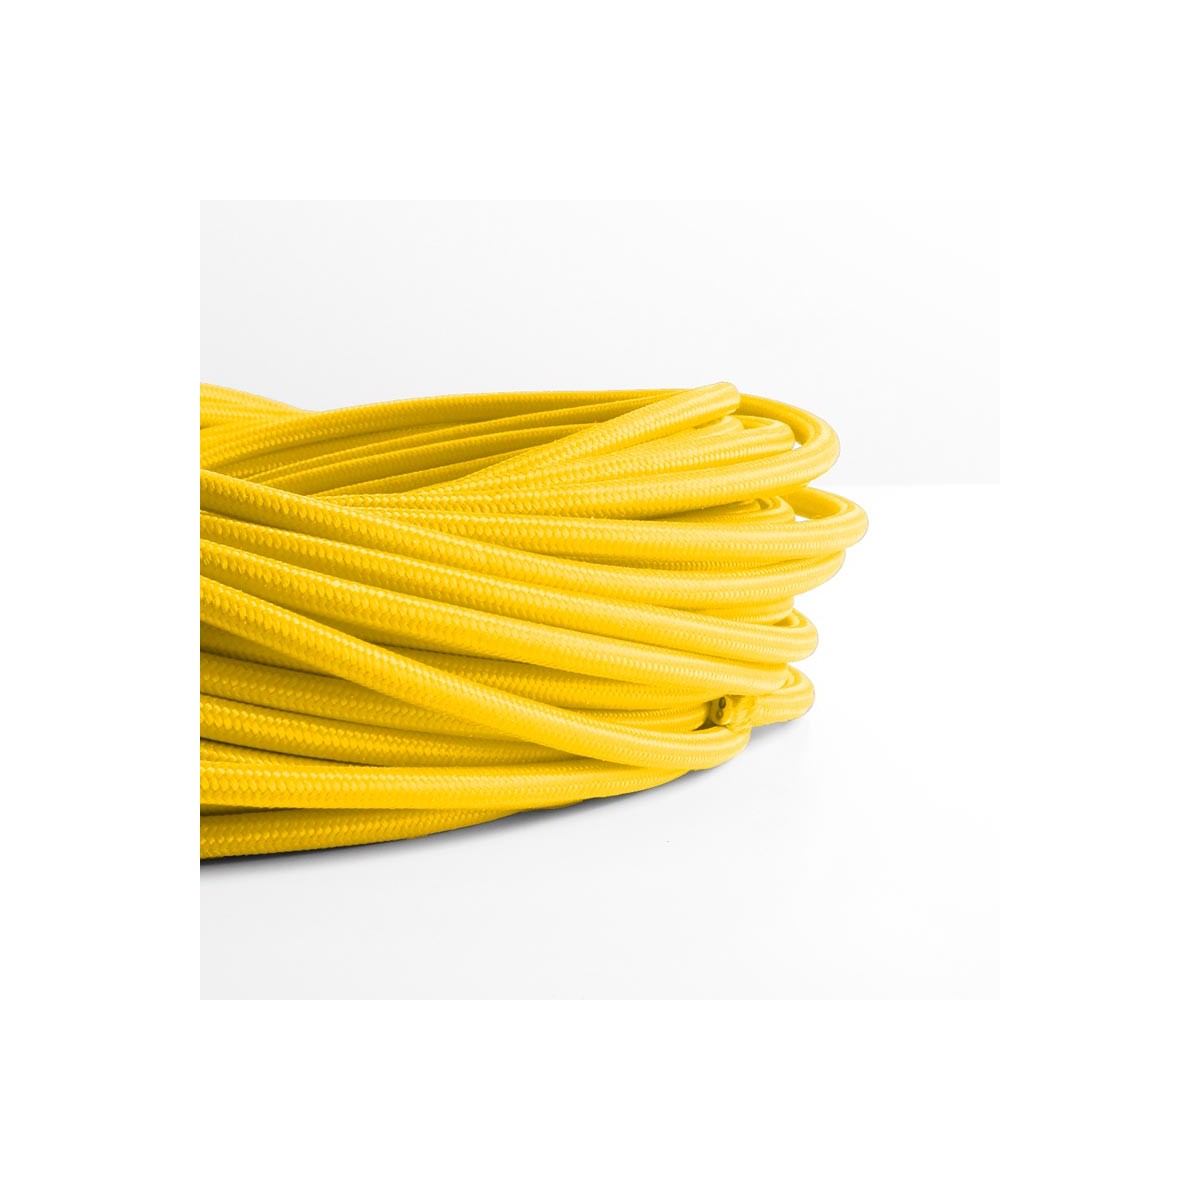 Cabo eléctrico redondo revestido a algodão Amarelo (Cavo elettrico rotondo giallo rivestito di cotone)